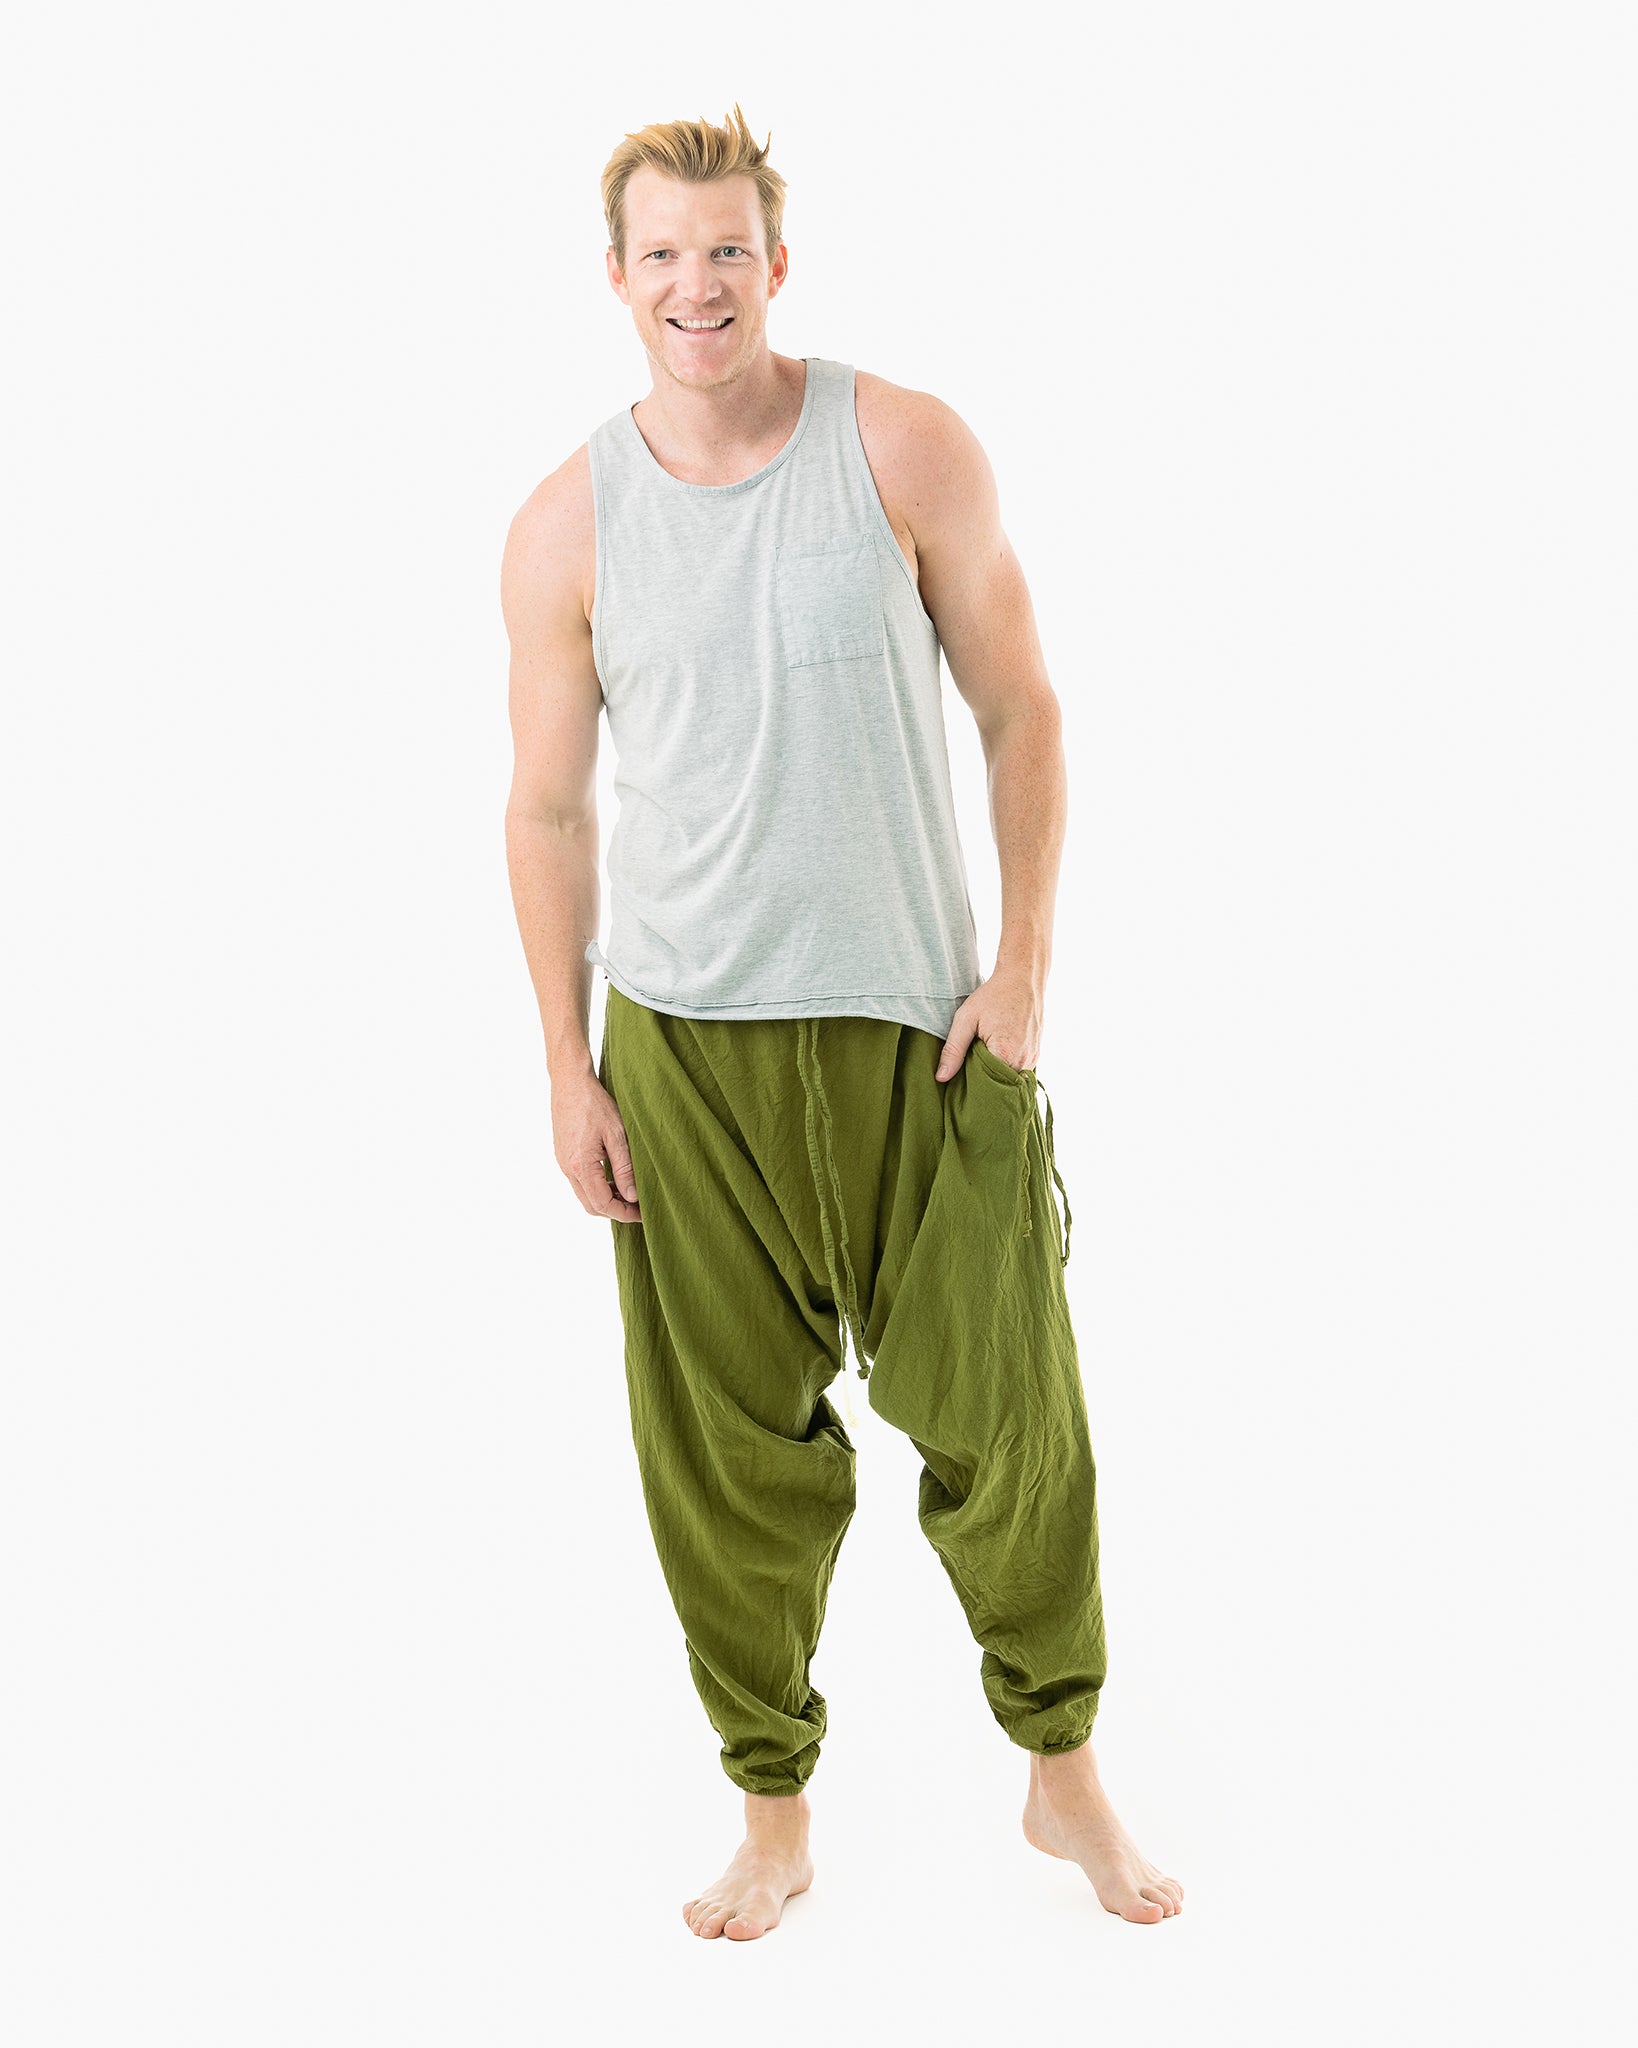 100% Organic Egyptian Cotton Lounge Pants or Yoga Pants for Men and Women